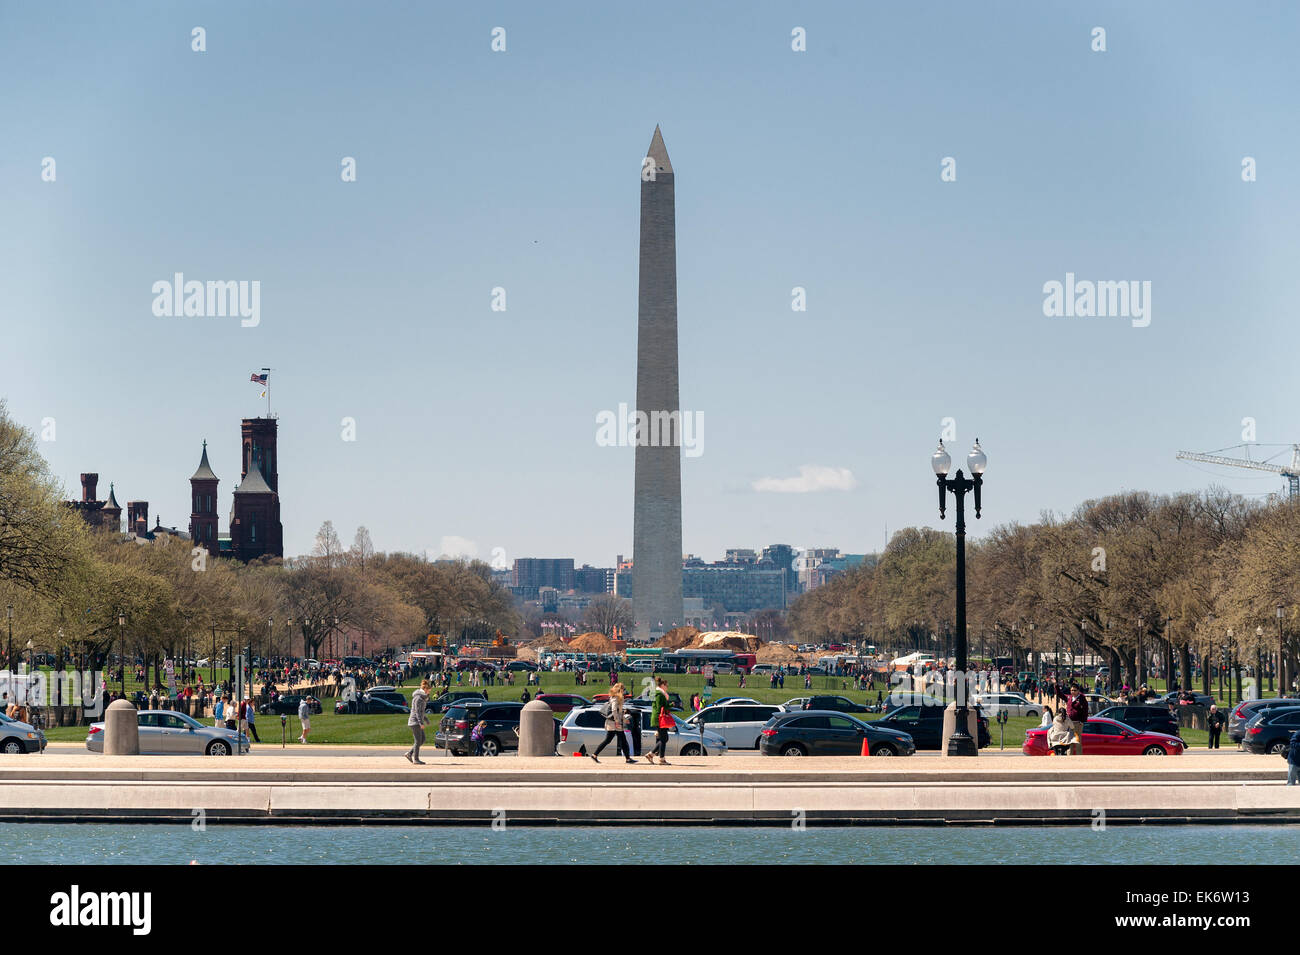 Washington Monument (Einkaufszentrum) in Washington D.C. Stockfoto